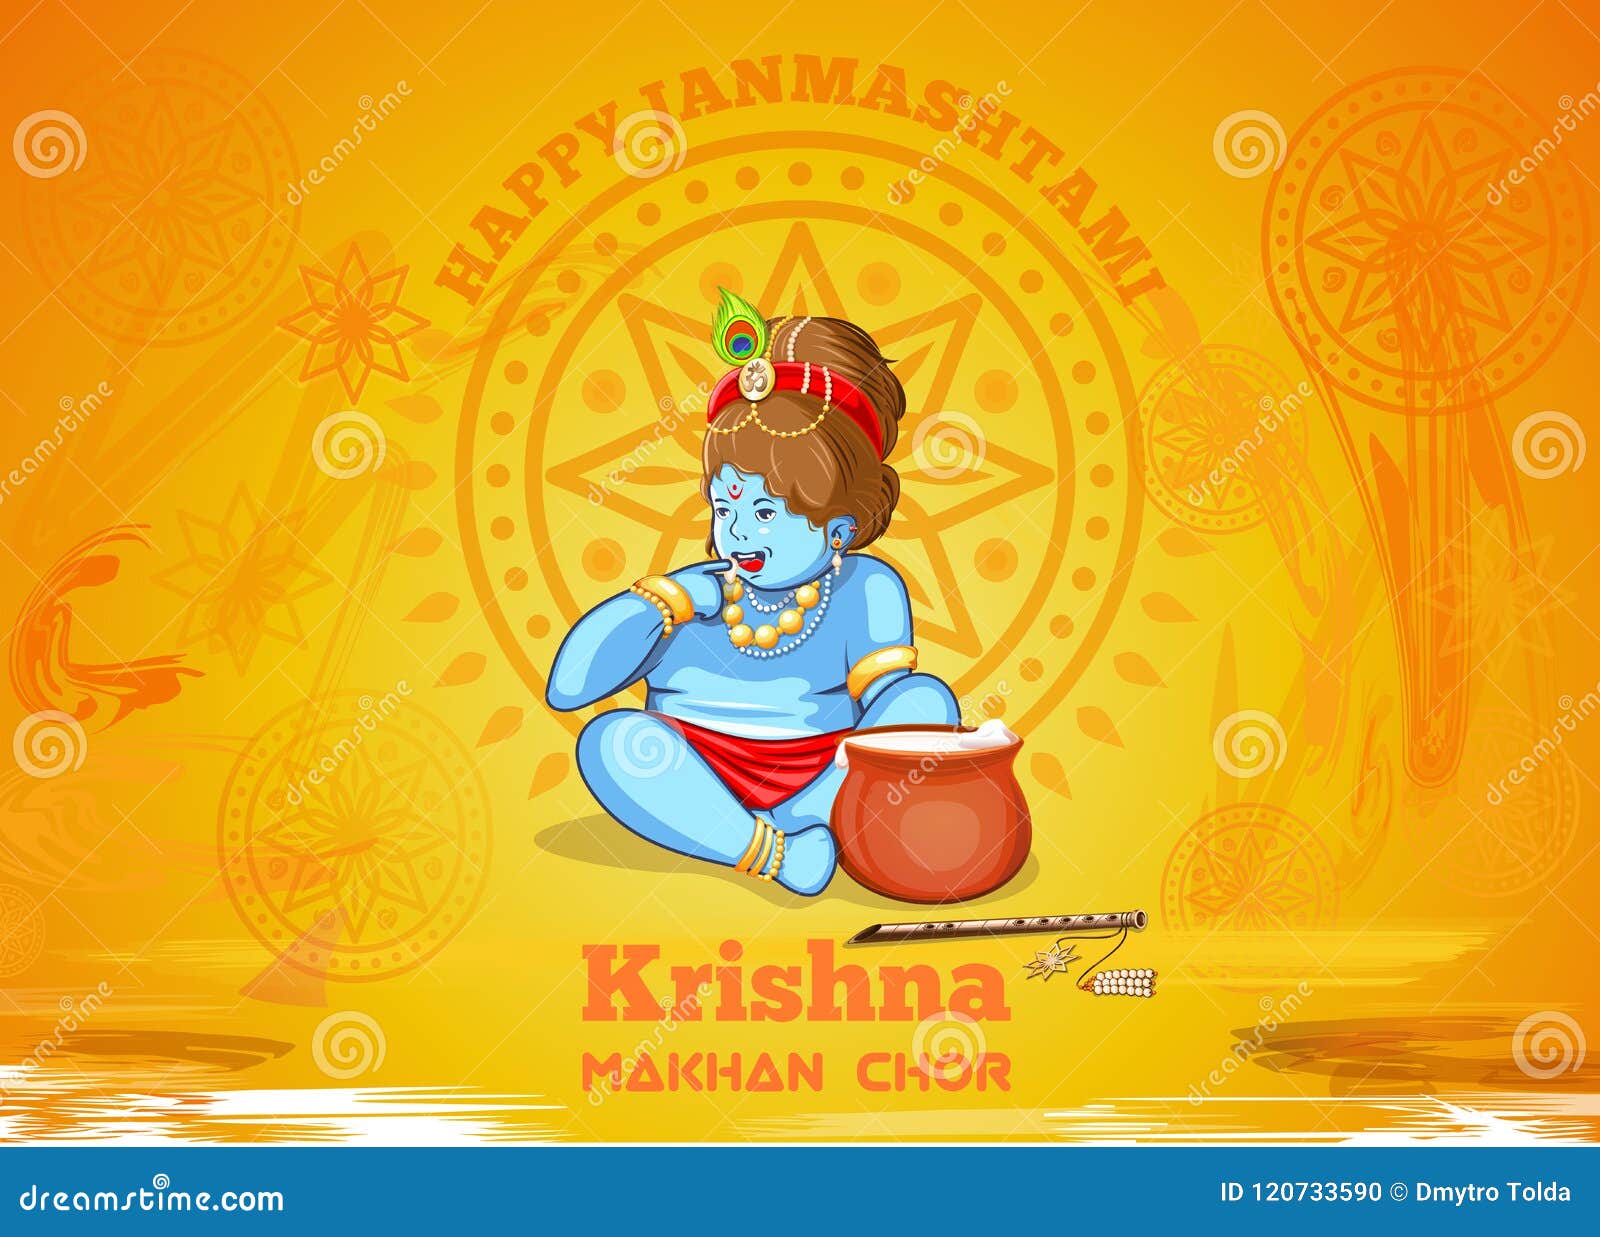 Krishna for Today Makhan Chor